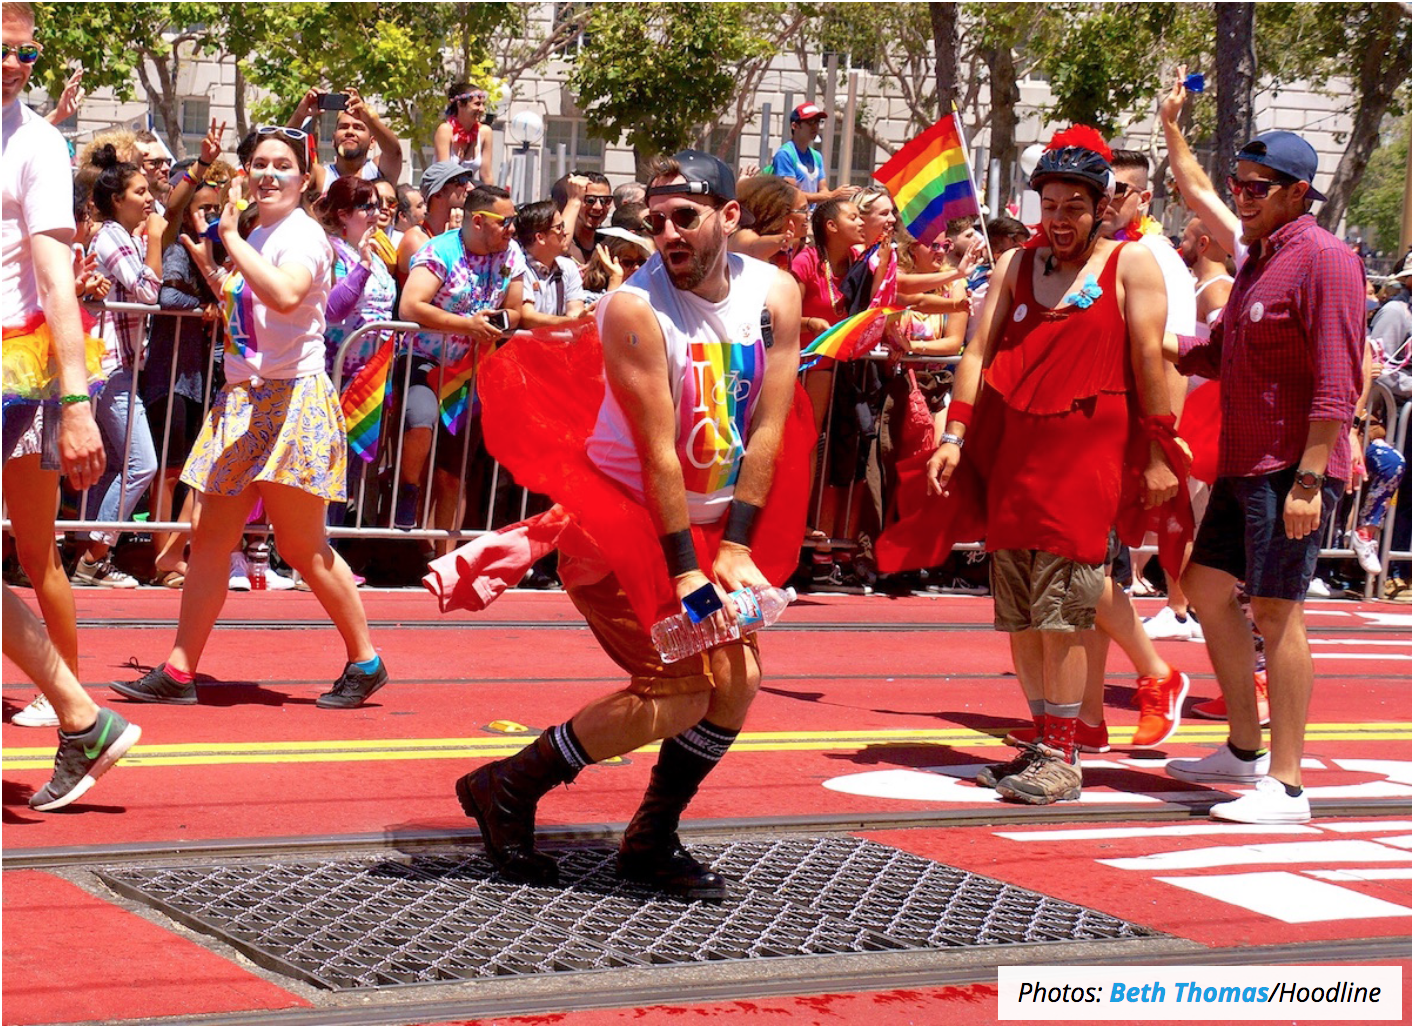 People dancing in colorful apparel at SF Pride celebration